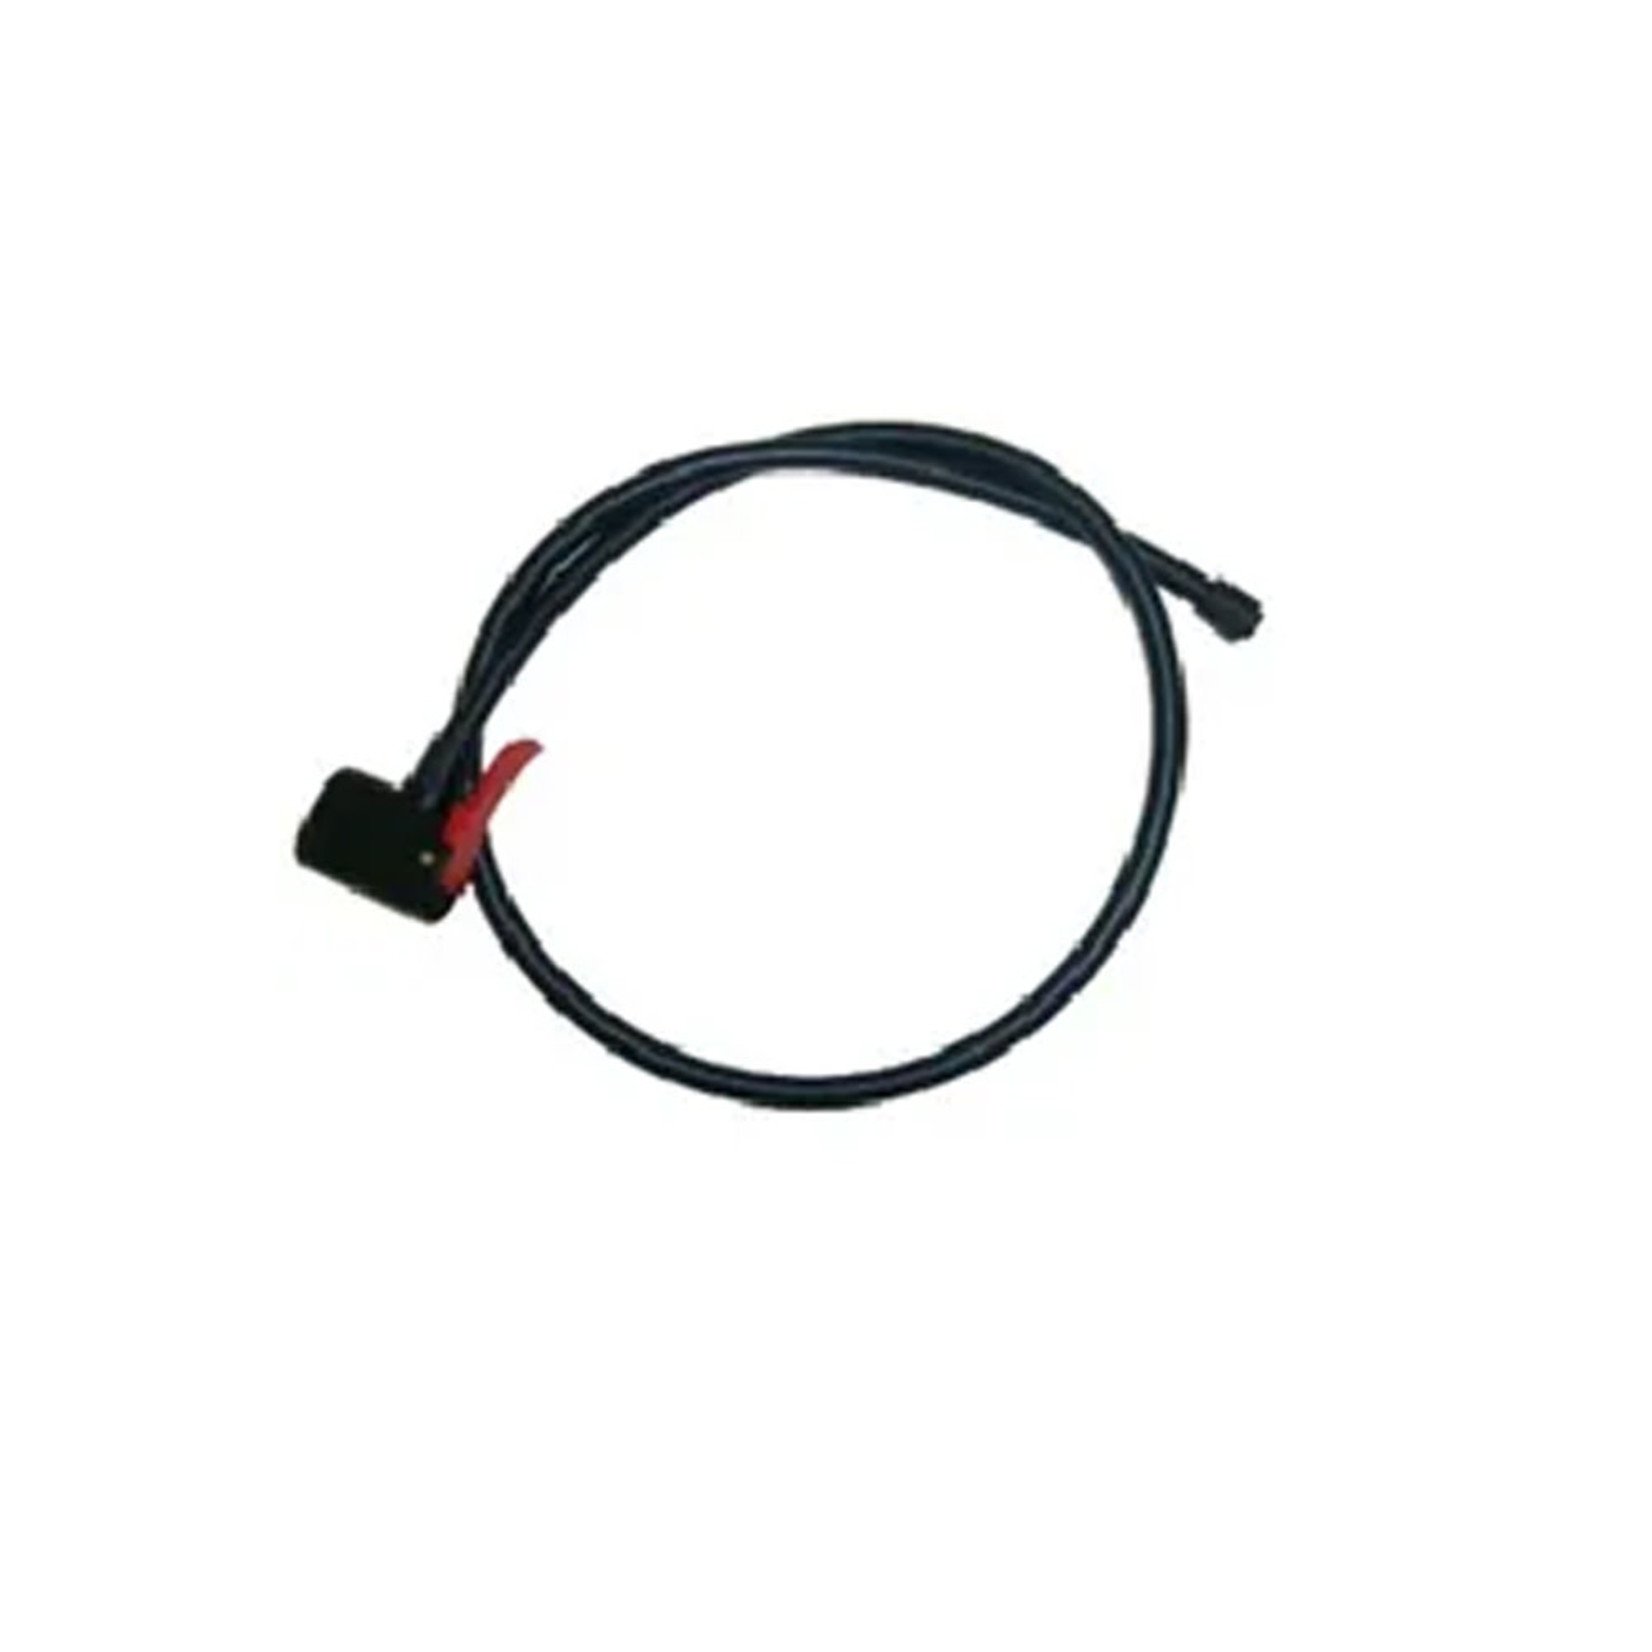 Bicycle Parts Wholesale BPW Pump Clever Valve & Hose - Alloy Lock Lever W/Air Release Button